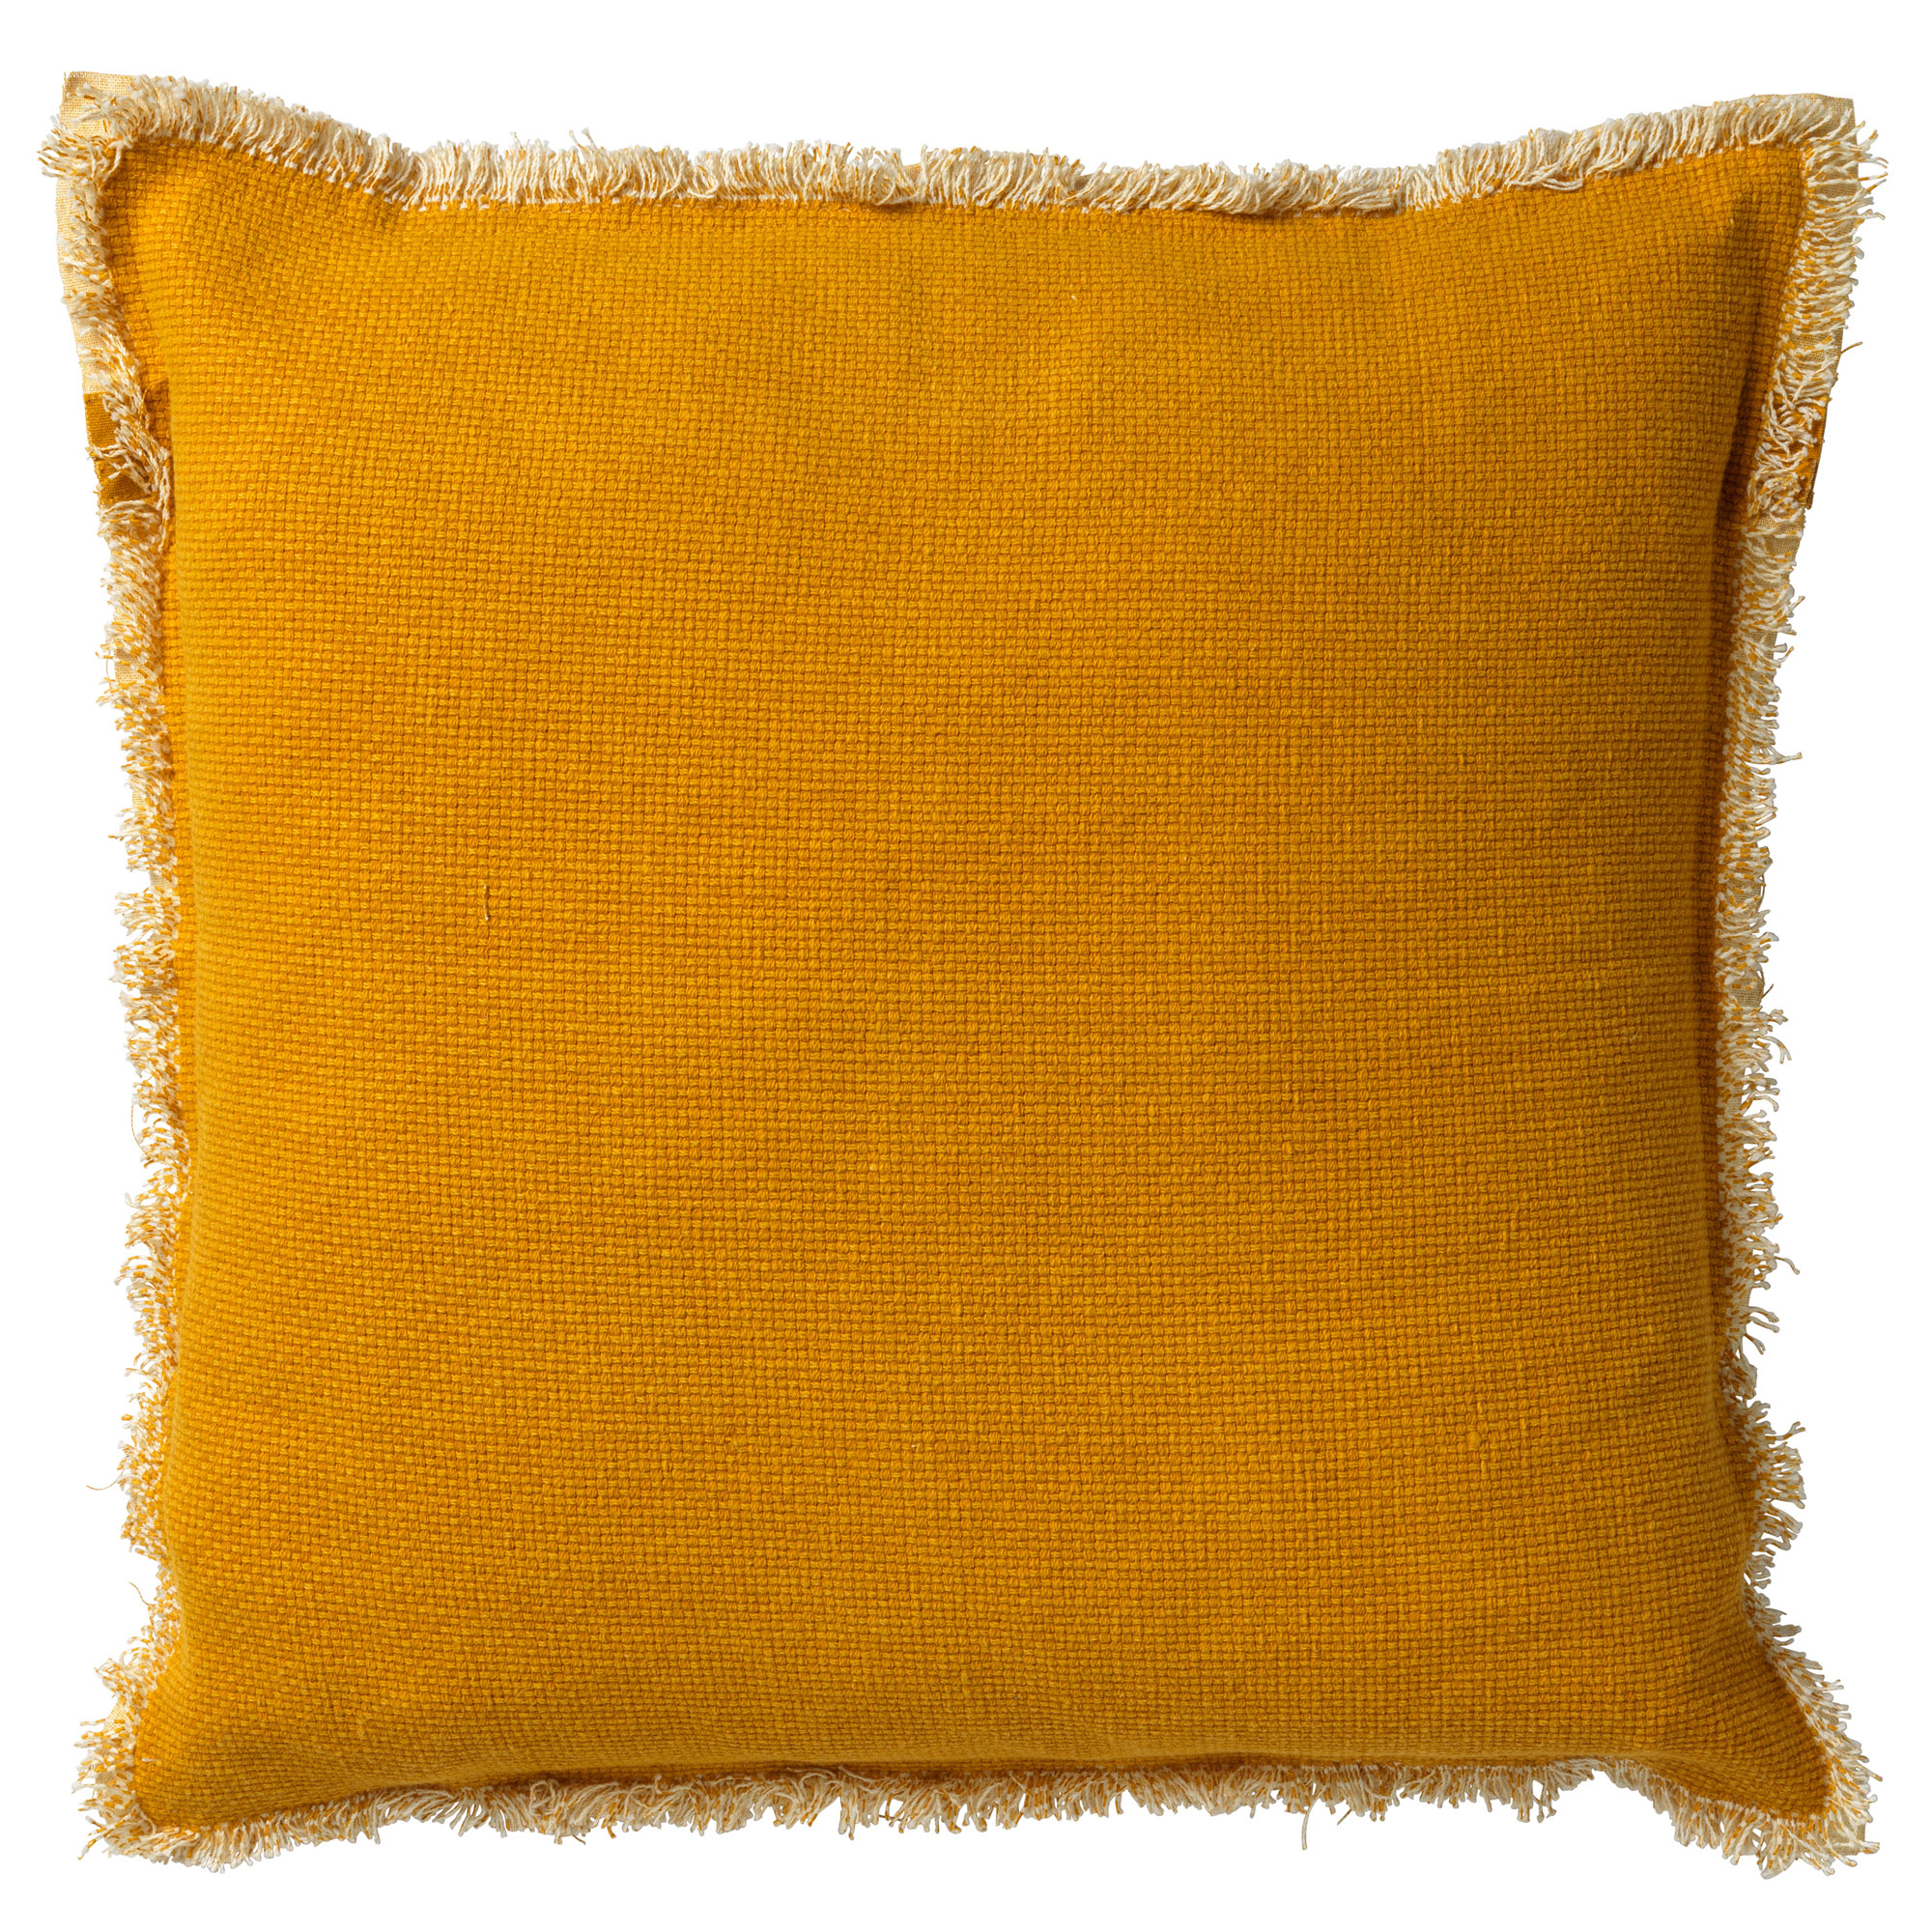 BURTO - Cushion 60x60 cm Golden Glow - yellow-ochre